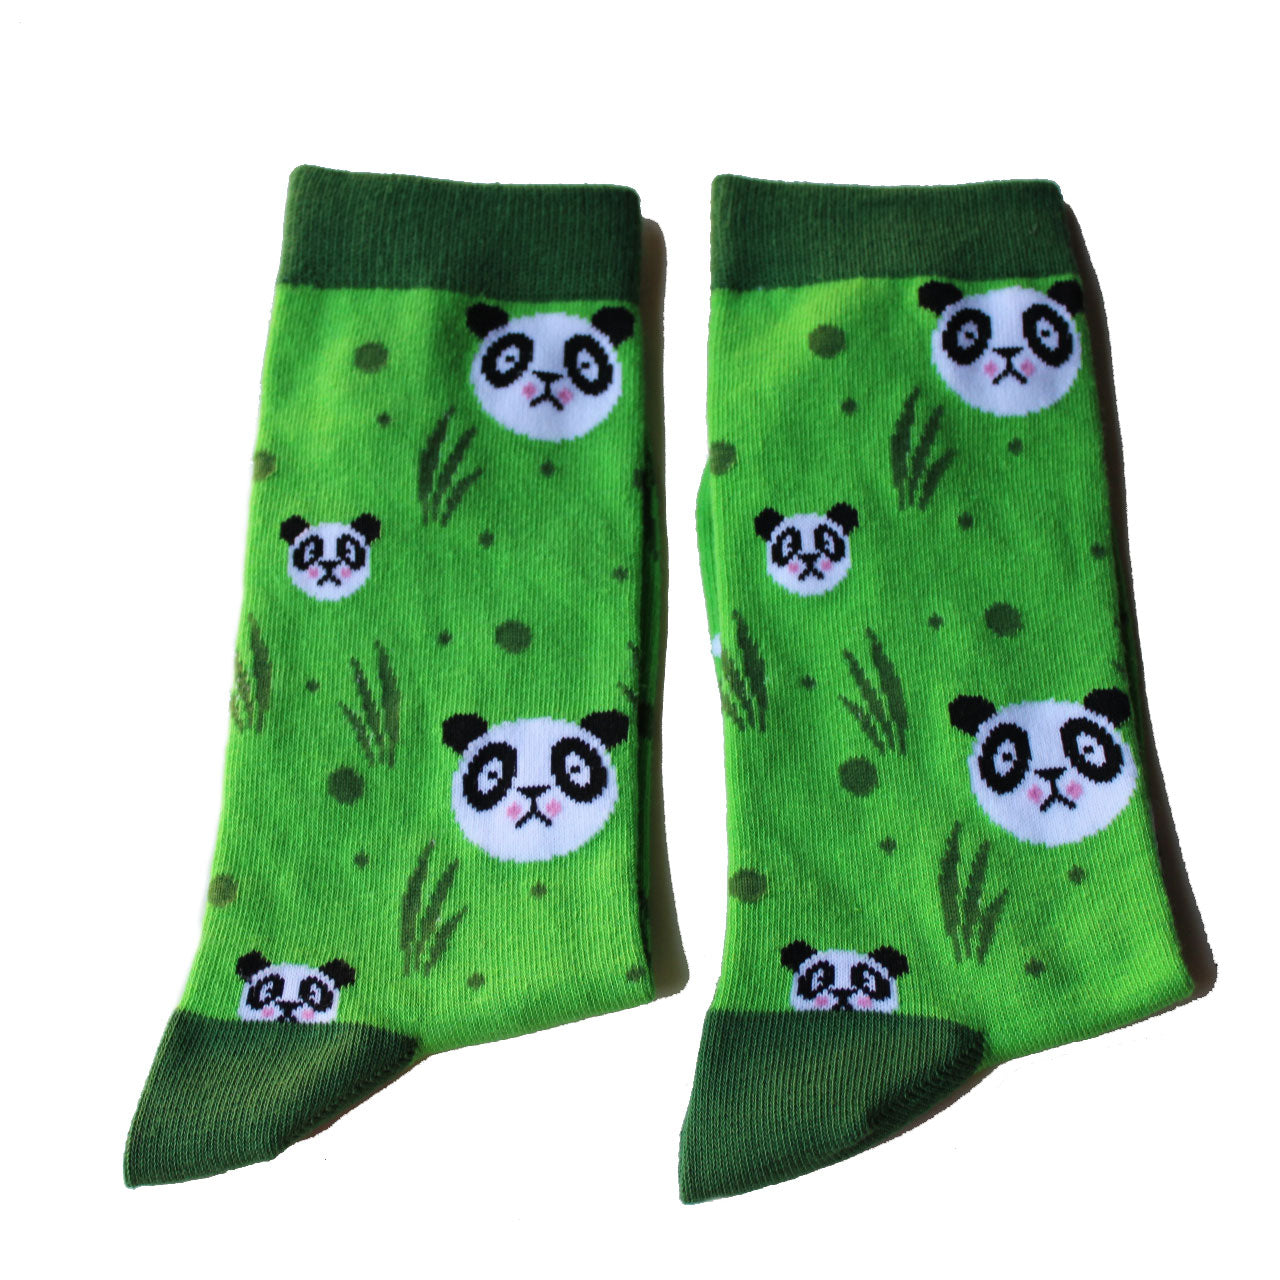 Jolly Soles Panda Socks all sizes available